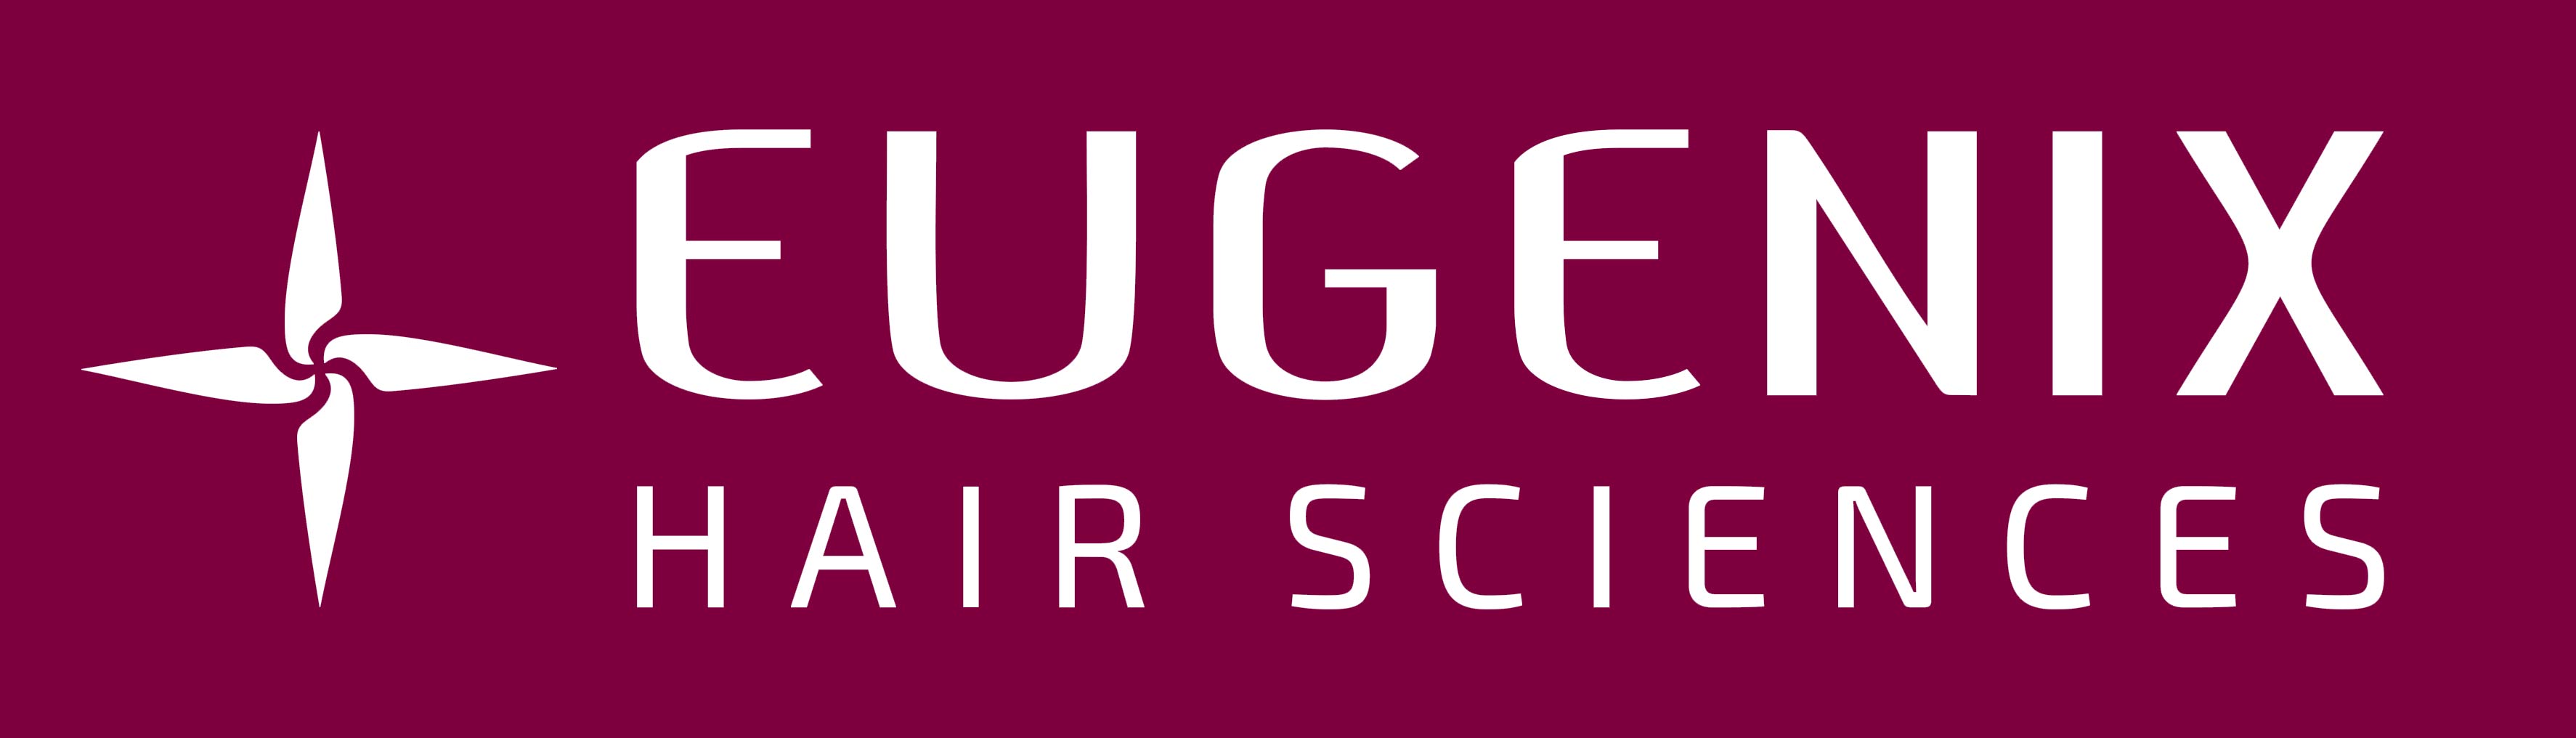 eugenix logo